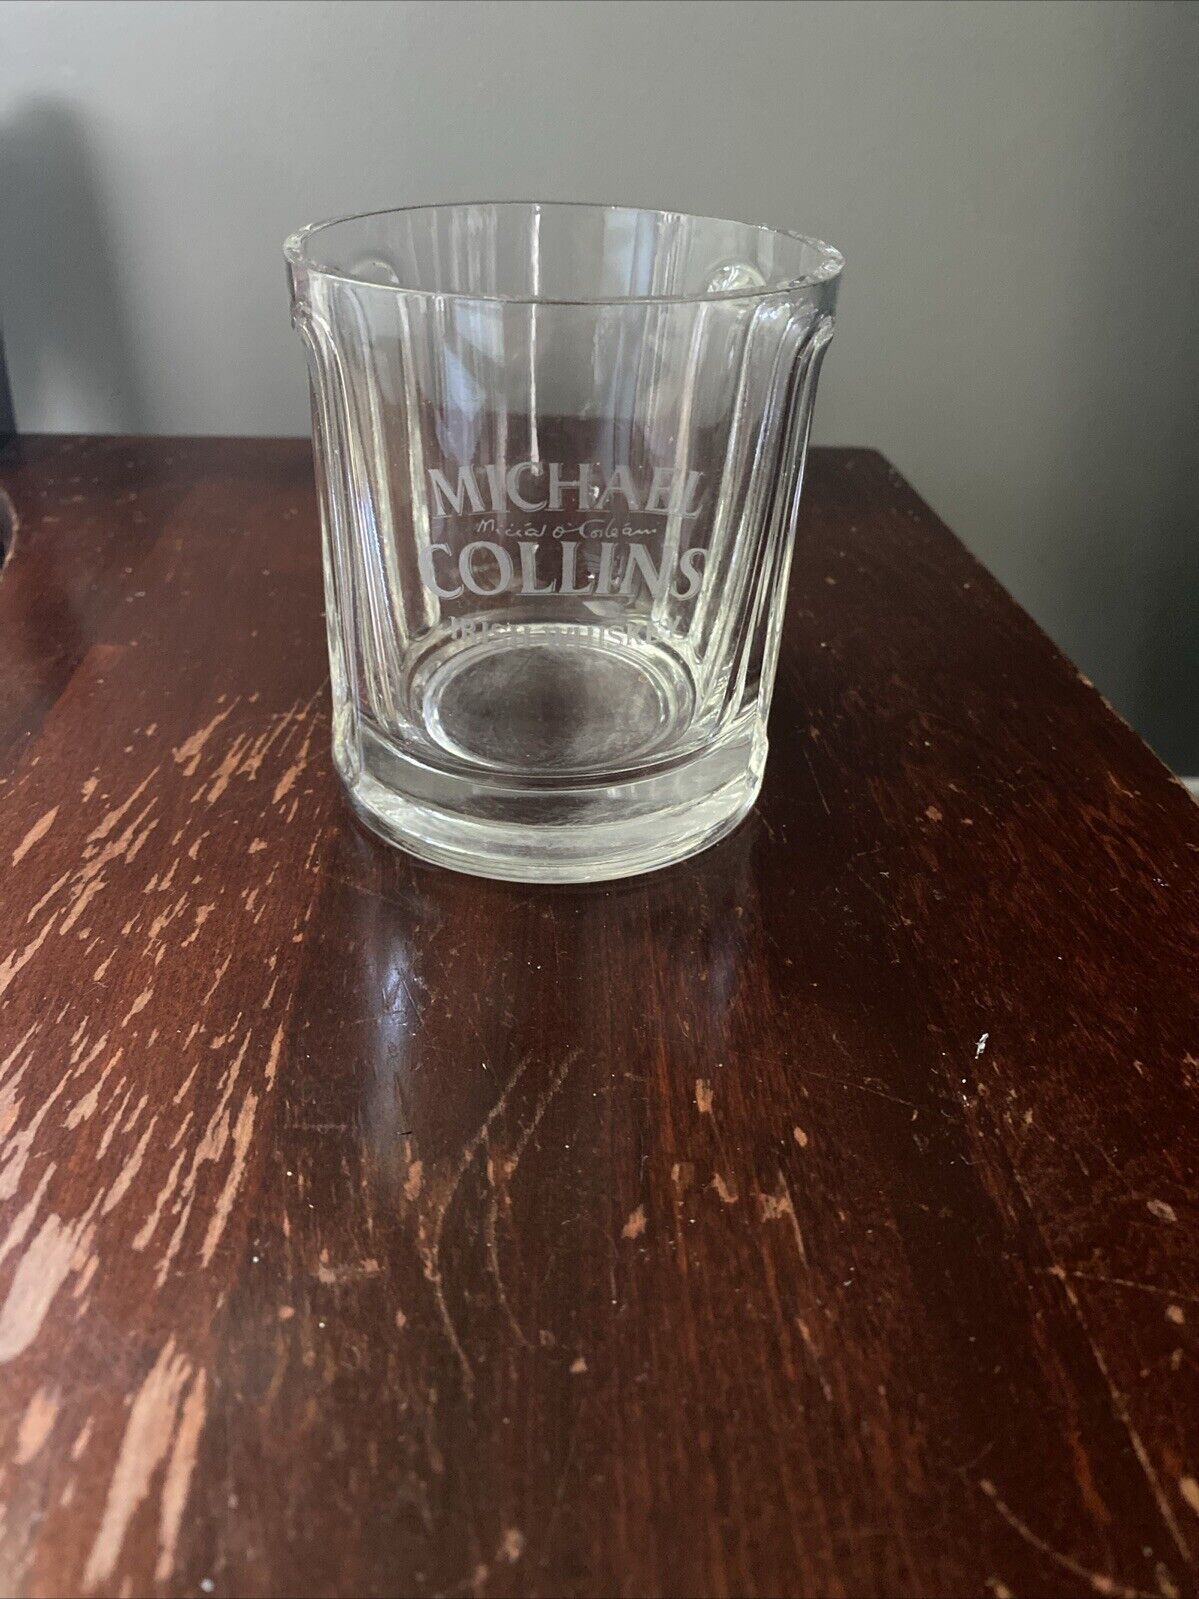 Michael Collins Irish Whiskey Glass. SET OF 3.